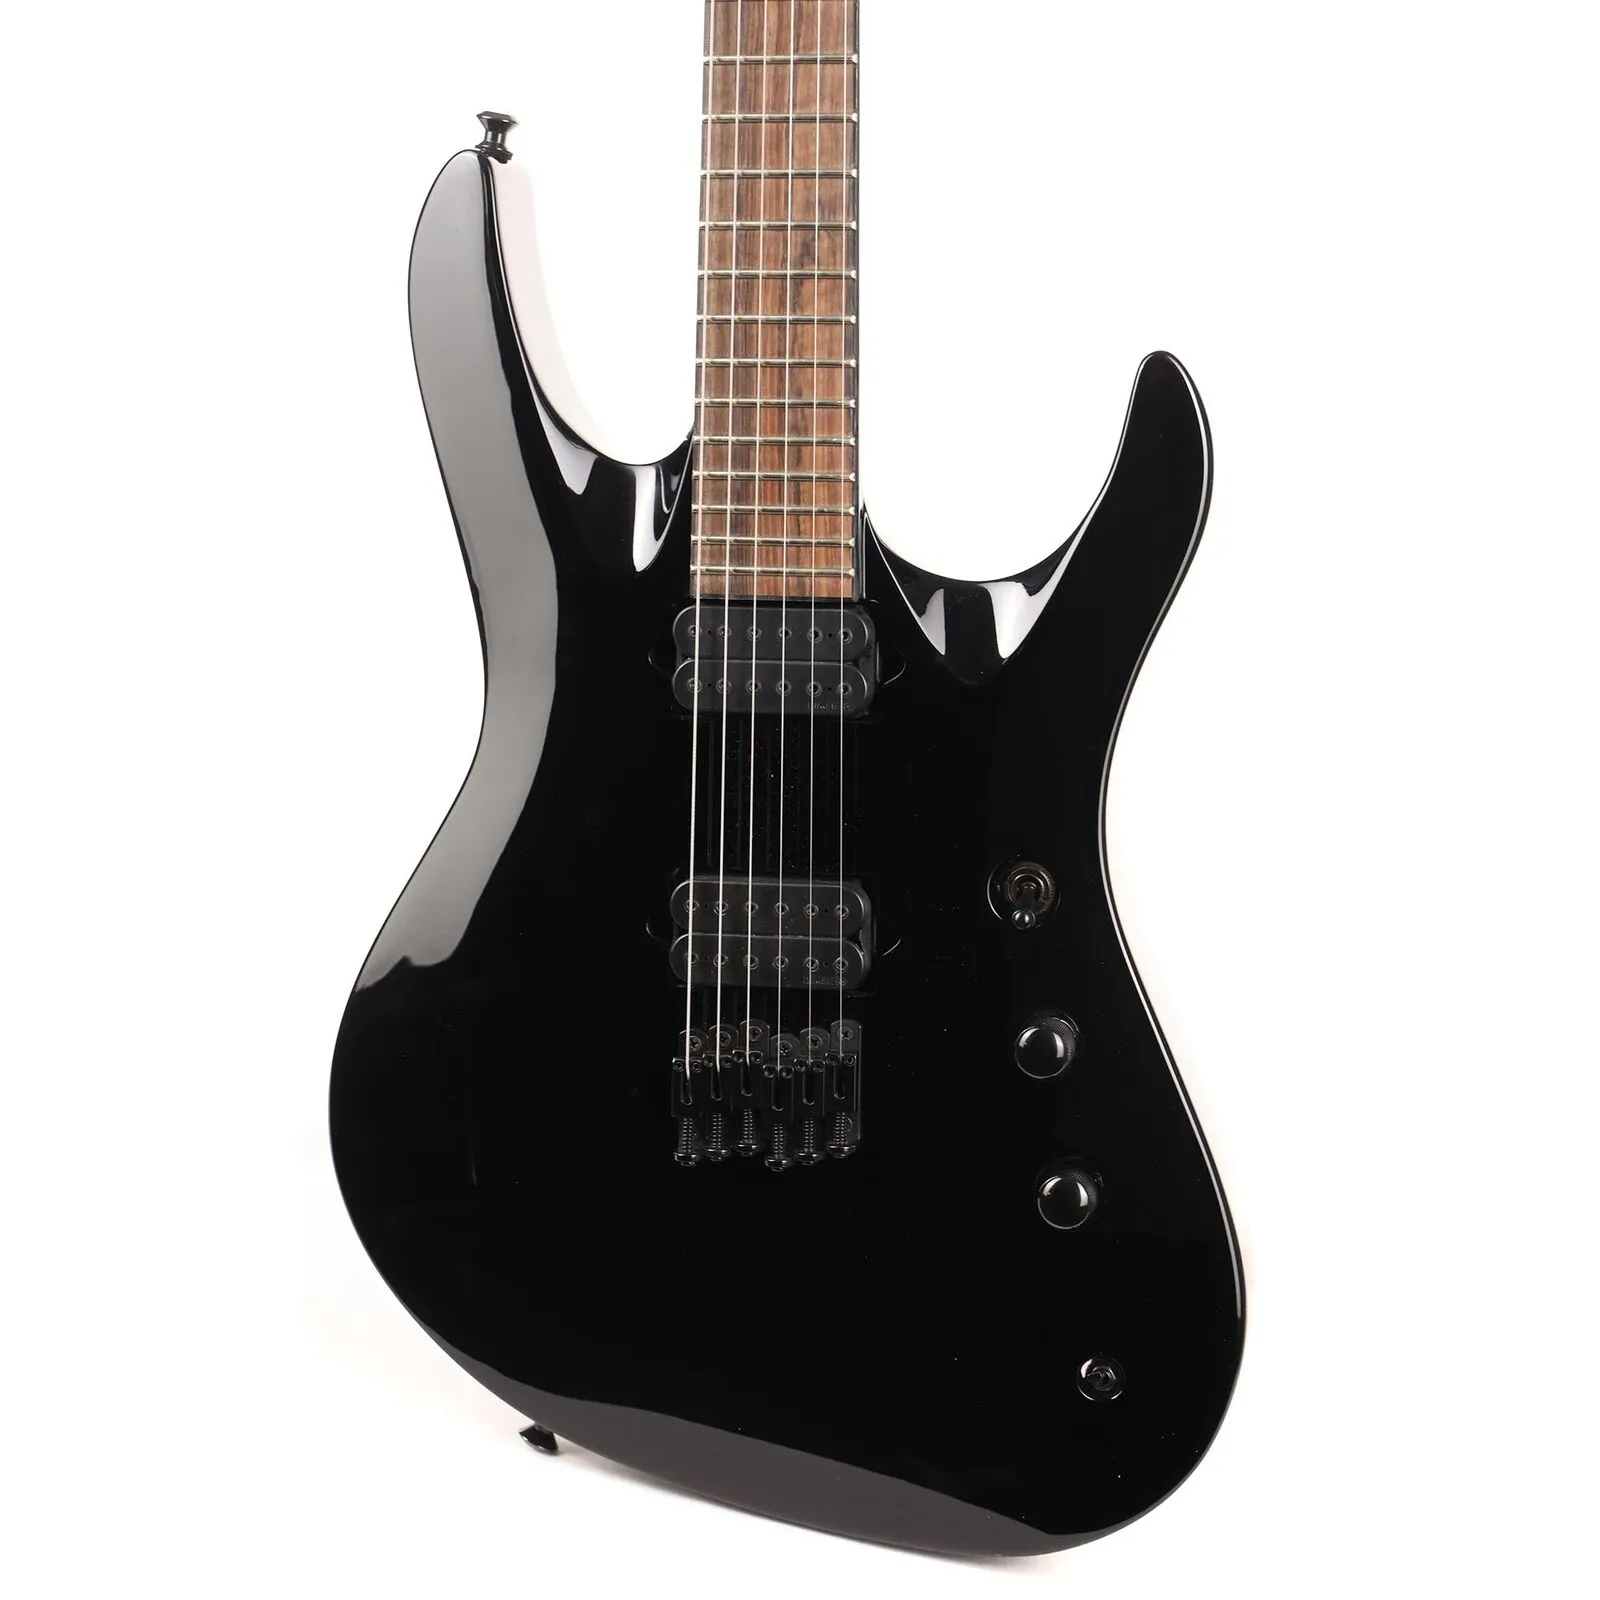 Pro Series Chris Broderick Signature HT6 Gloss Black Electric Guitar مثل الصور